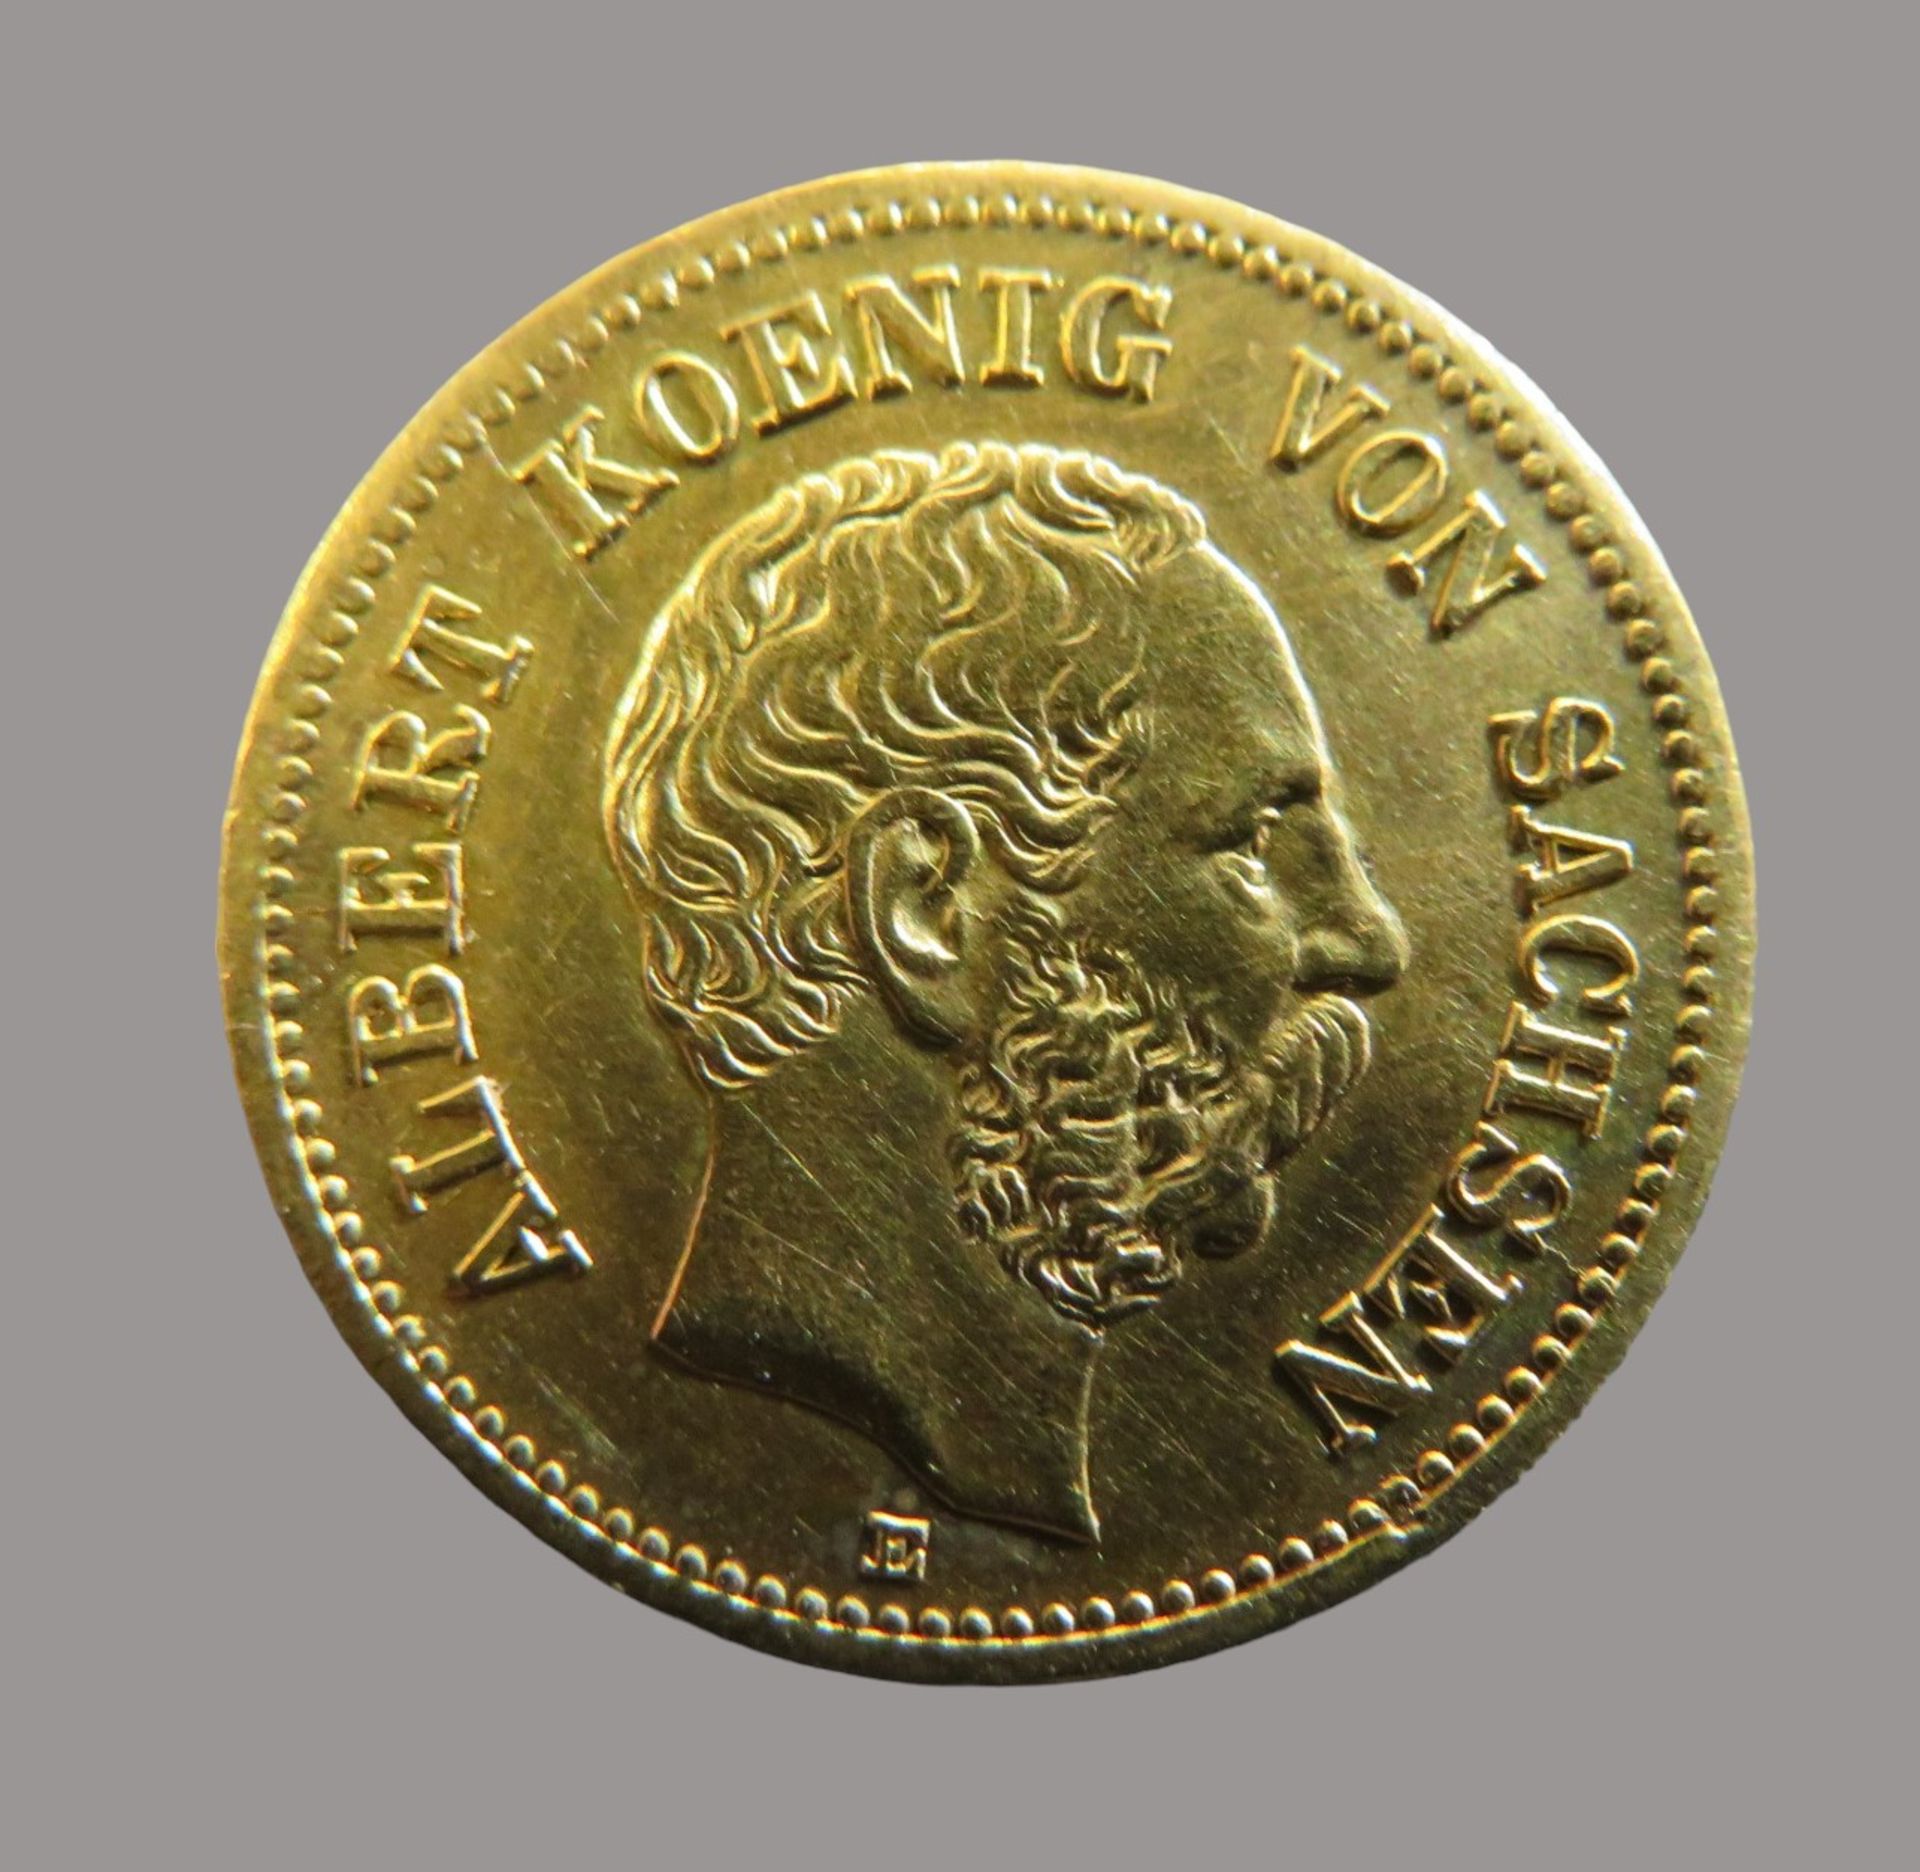 Goldmünze, 5 Mark, Albert König von Sachsen, 1877E, Gold 900/000, 1,99 g, J 260, d 1,7 cm.